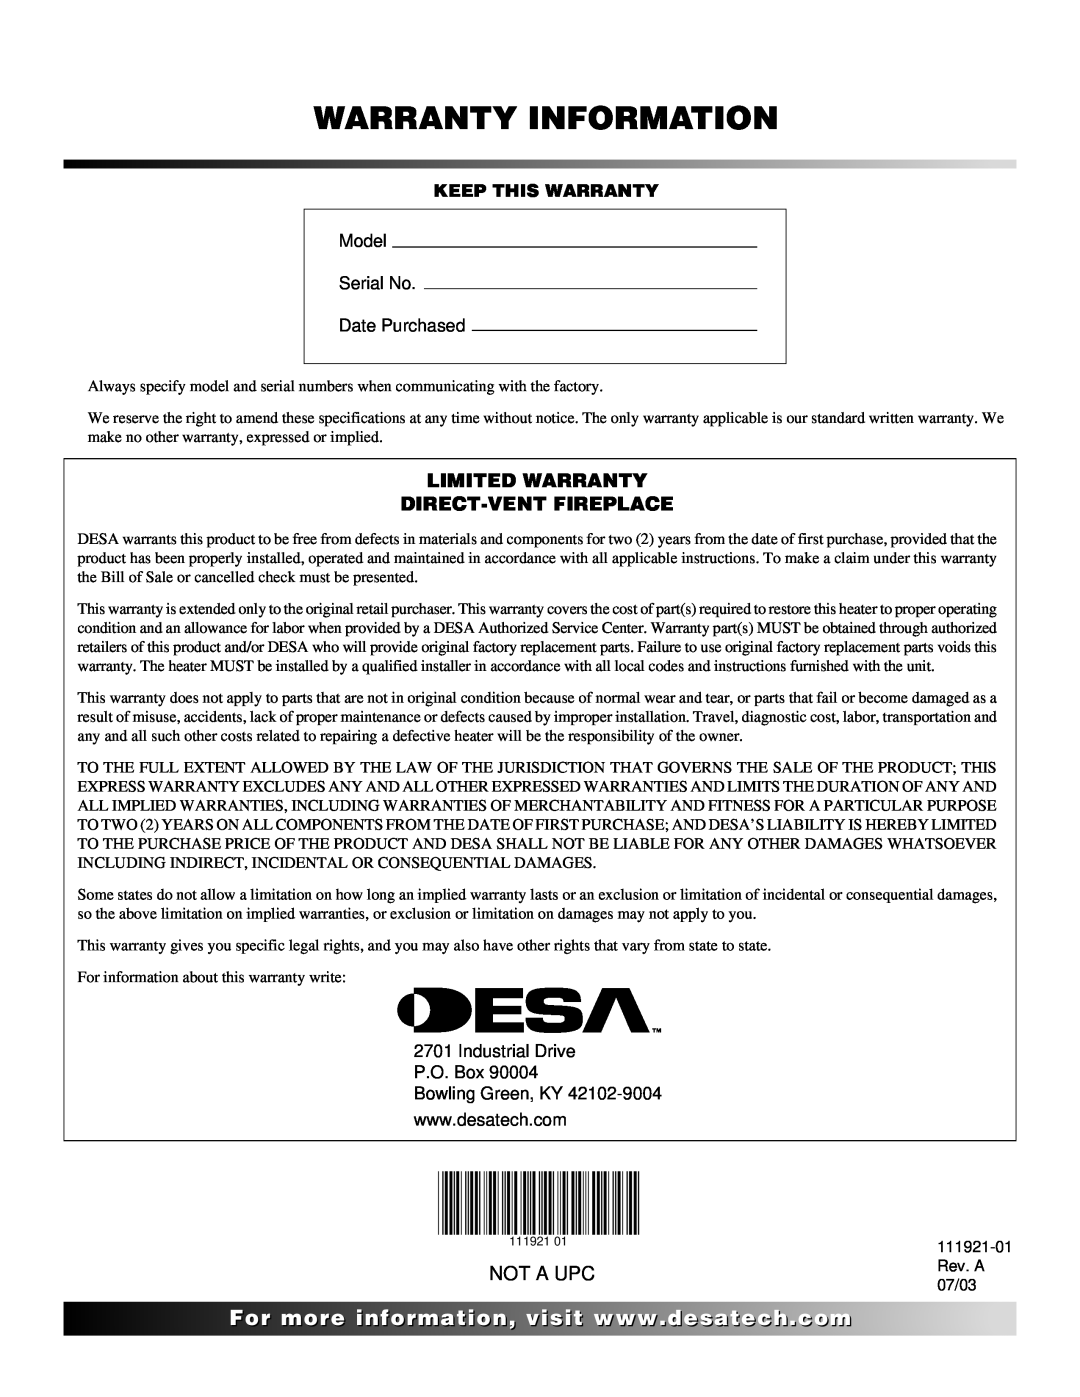 Desa (V)K42N installation manual Not A Upc, Warranty Information, Limited Warranty Direct-Ventfireplace 